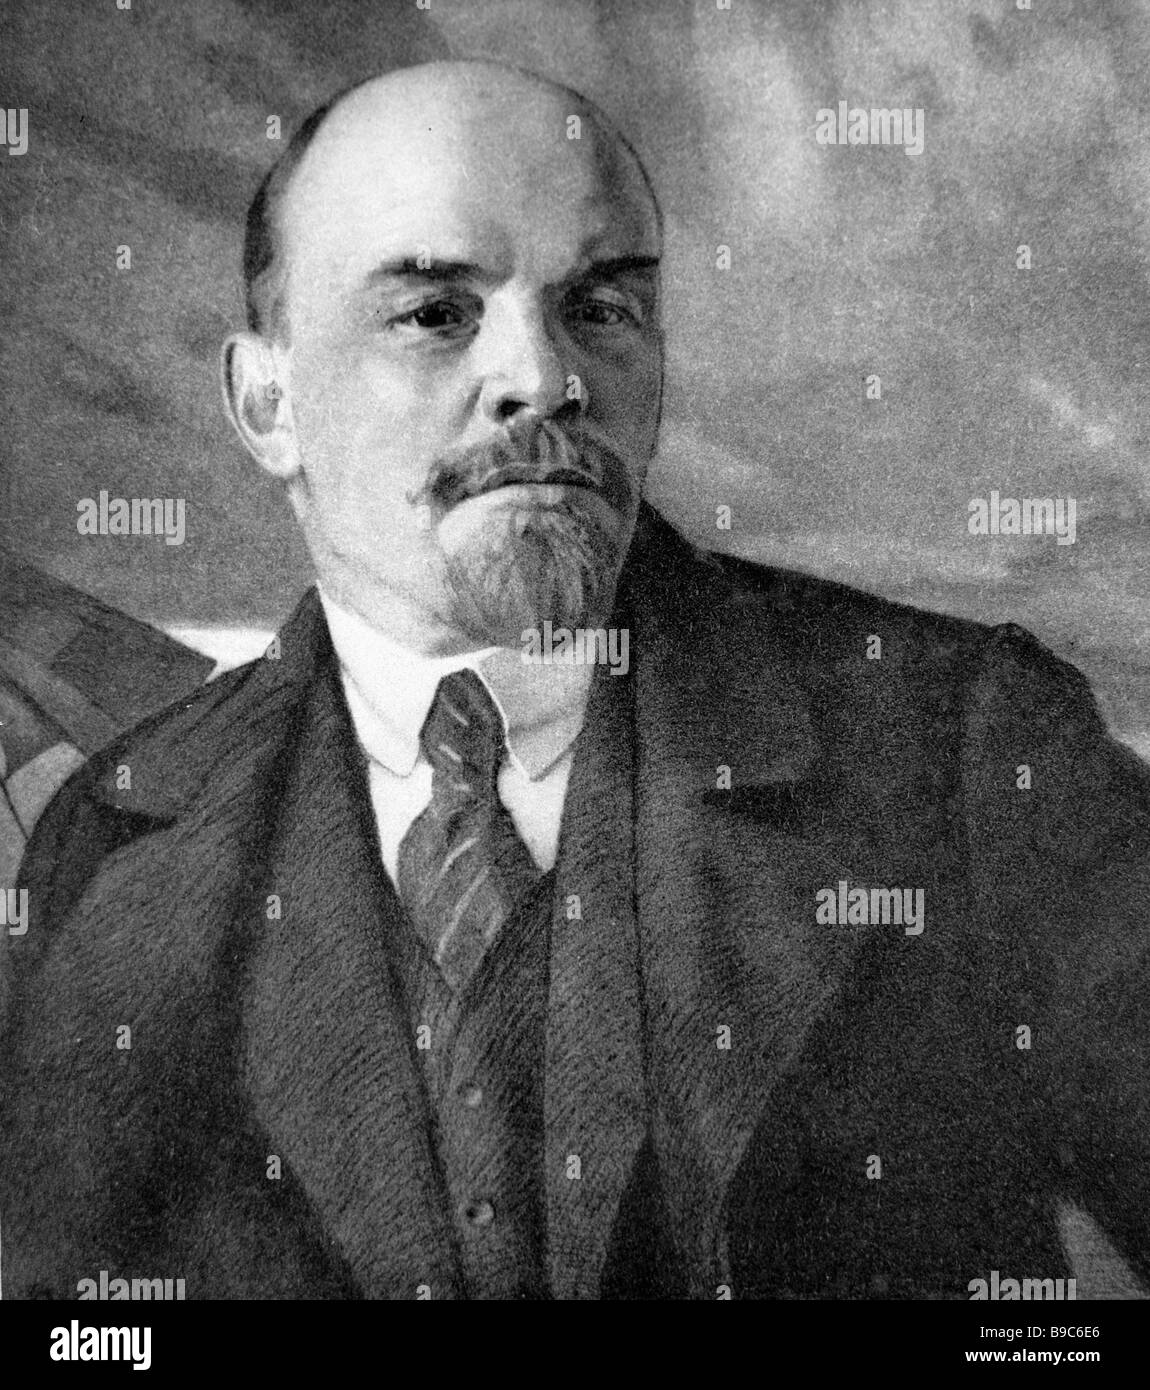 Эберлинг портрет Ленина